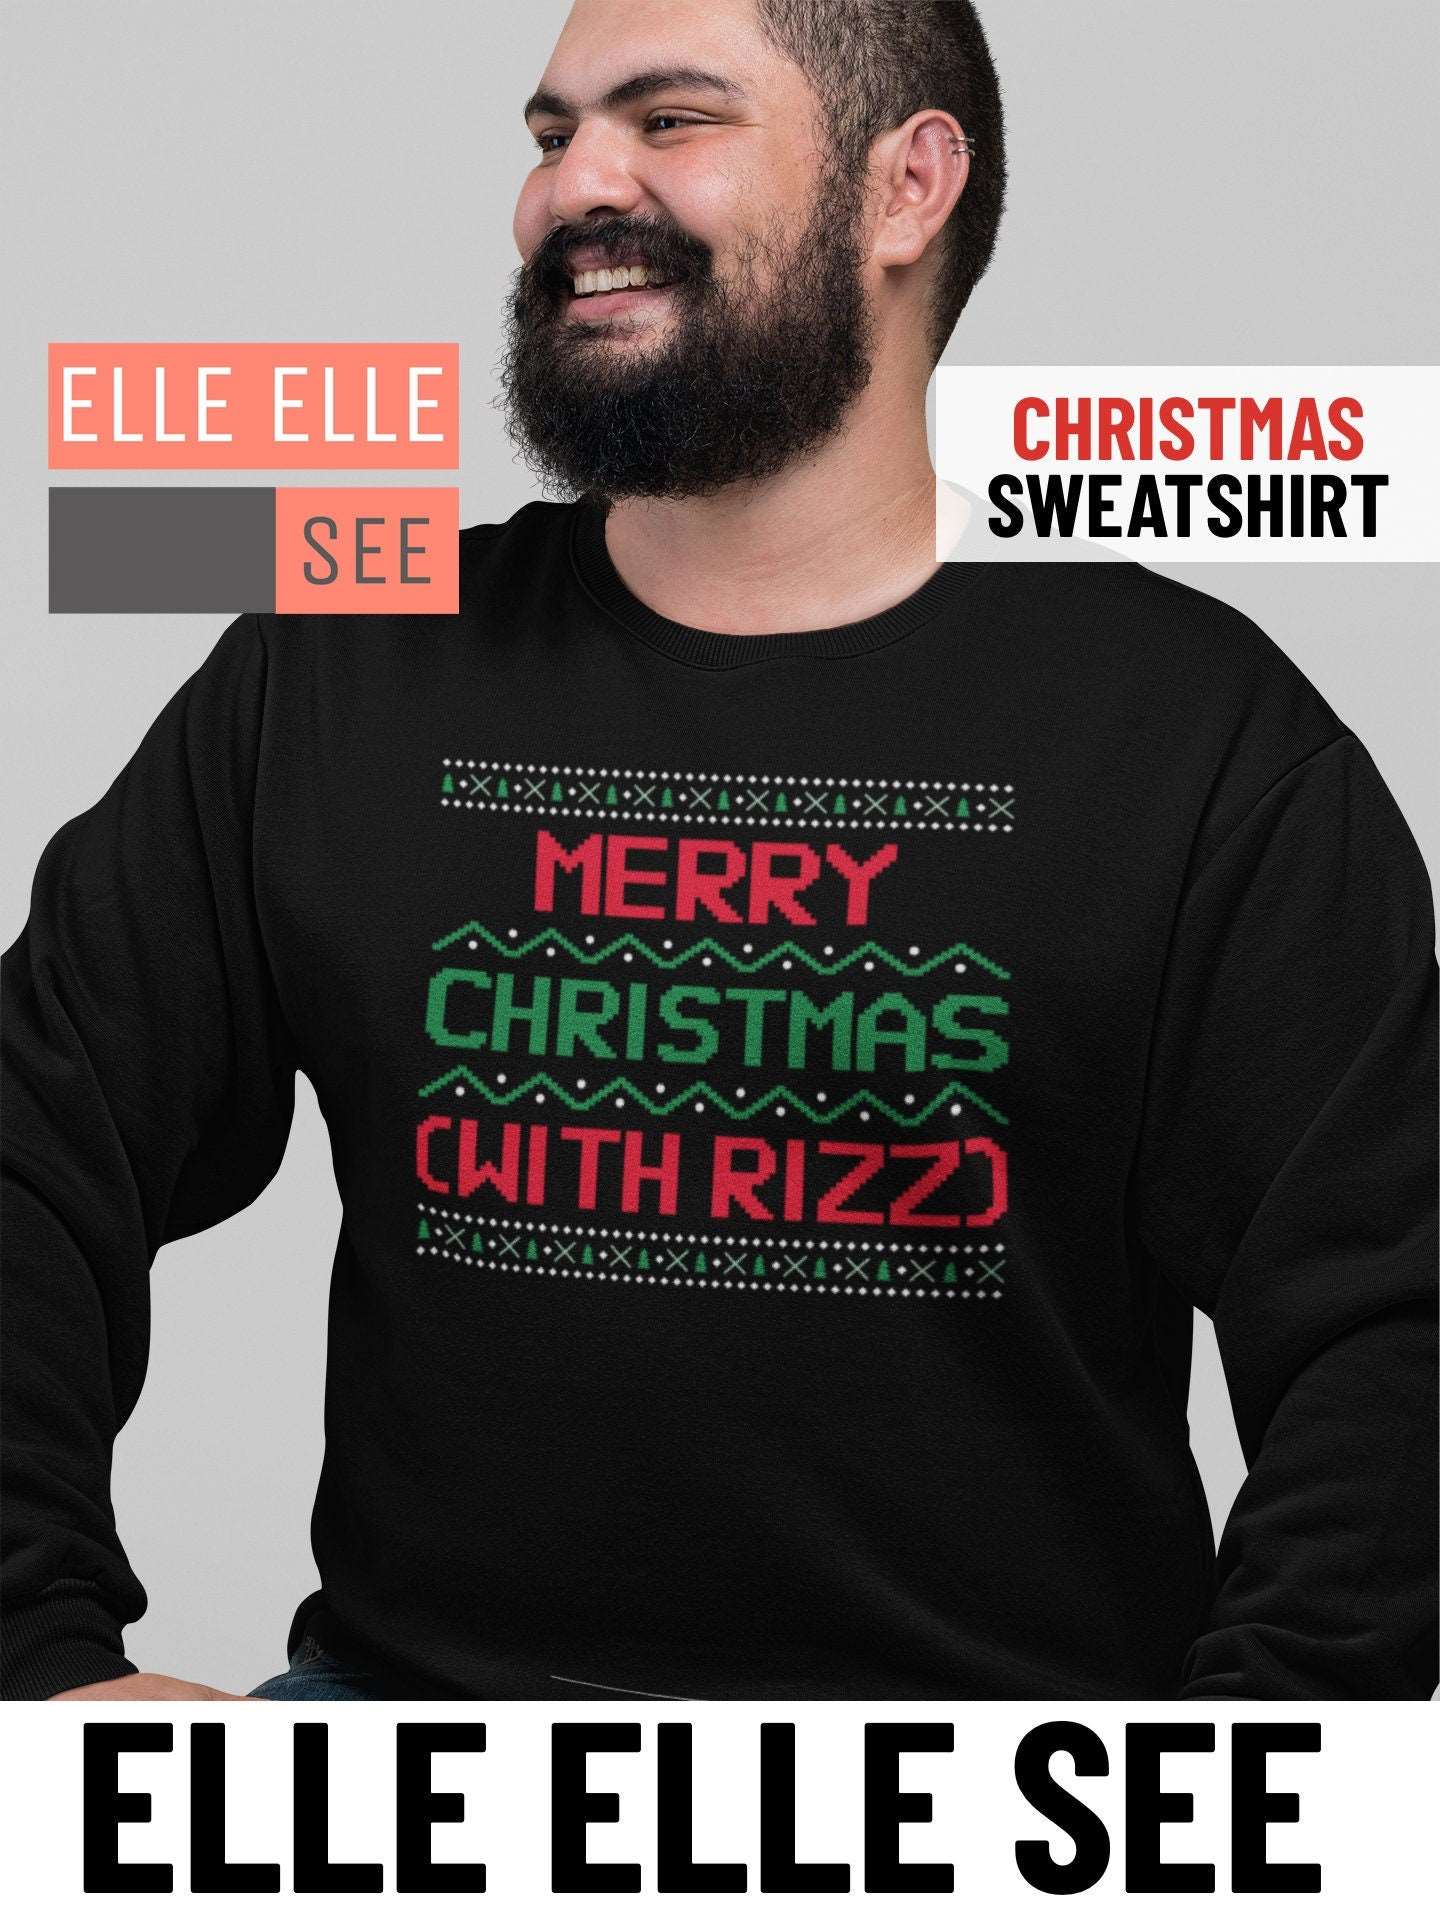 Merry Christmas (With Rizz) Sweatshirt - Christmas - Sweatshirt - Ugly Christmas - Christmas Sweater - Funny Sweatshirt - Rizz Gift - Gen Z